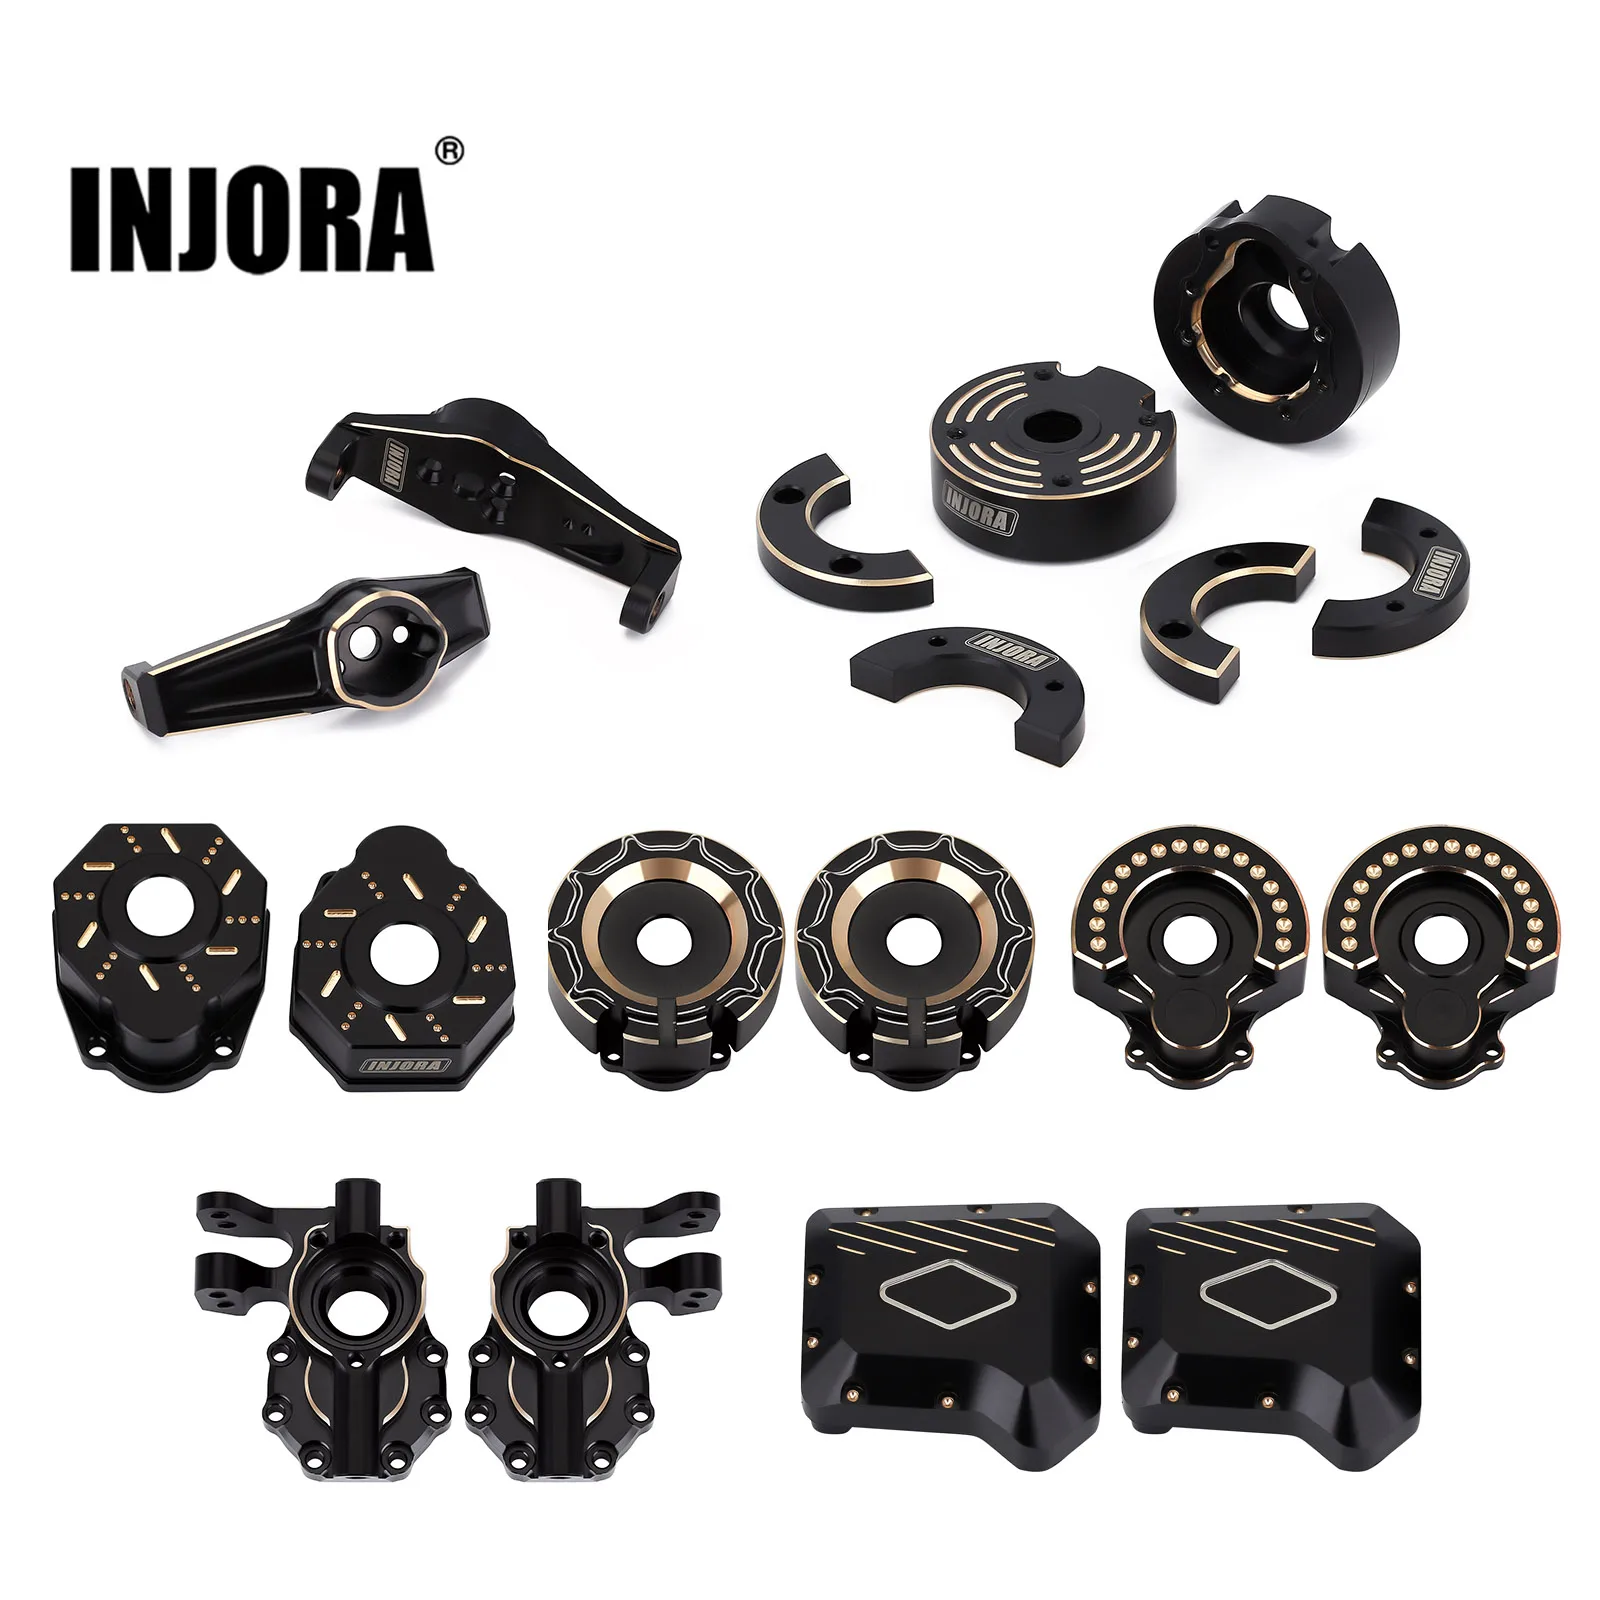 INJORA Heavy Black Coating Brass Counterweight Portal Drive Housing For 1/10 RC Crawler Car TRX4 TRX6 Upgrade Parts